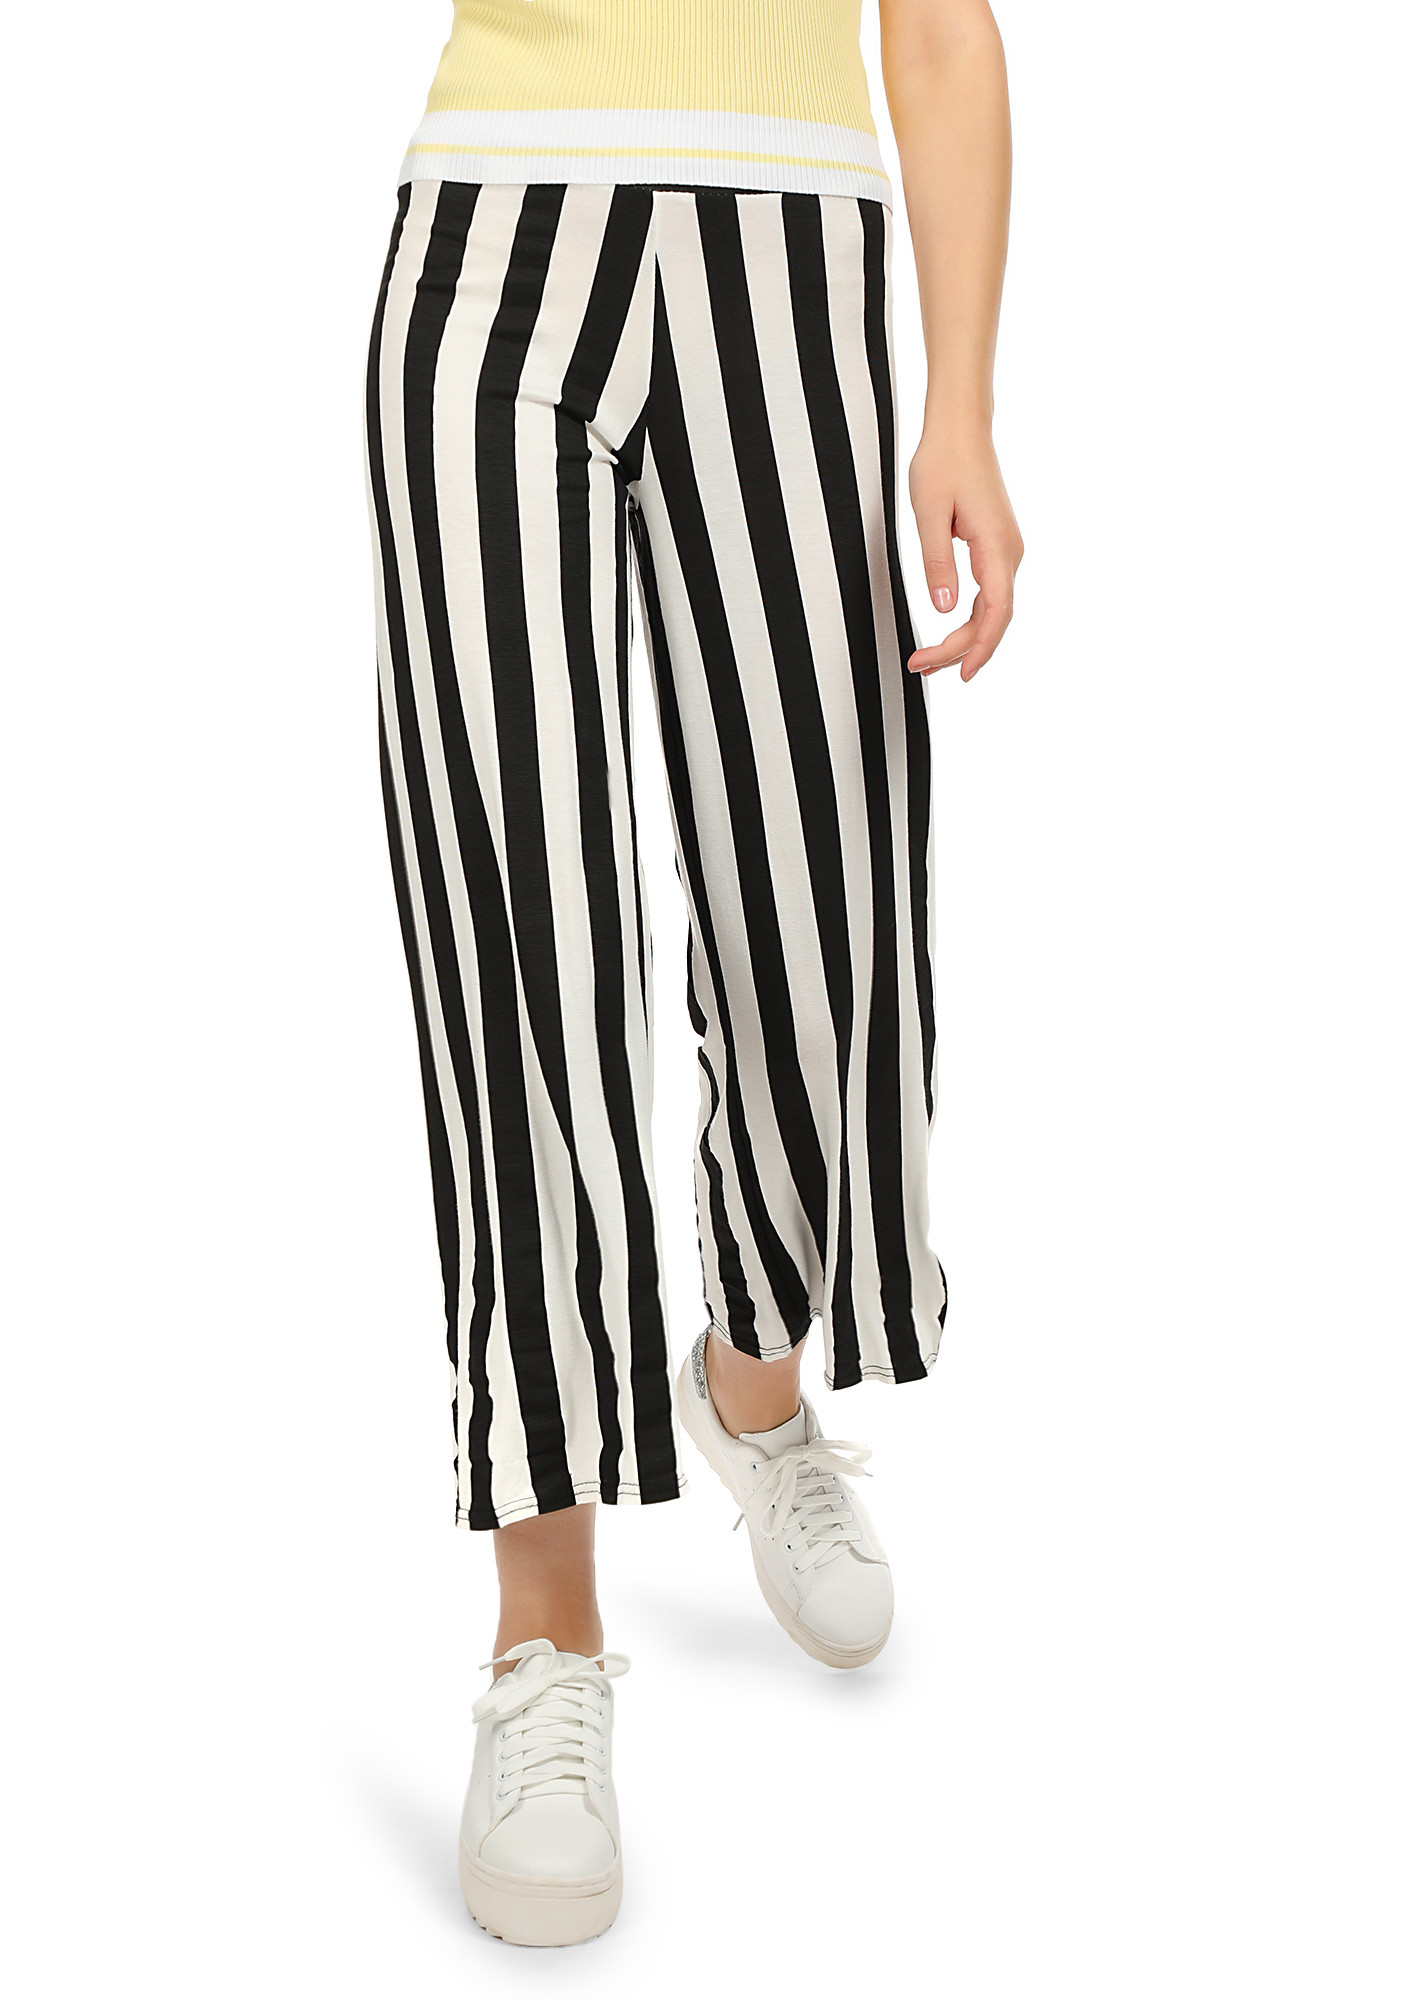 Unisex Black & White Striped Loose Pants - Babeehive